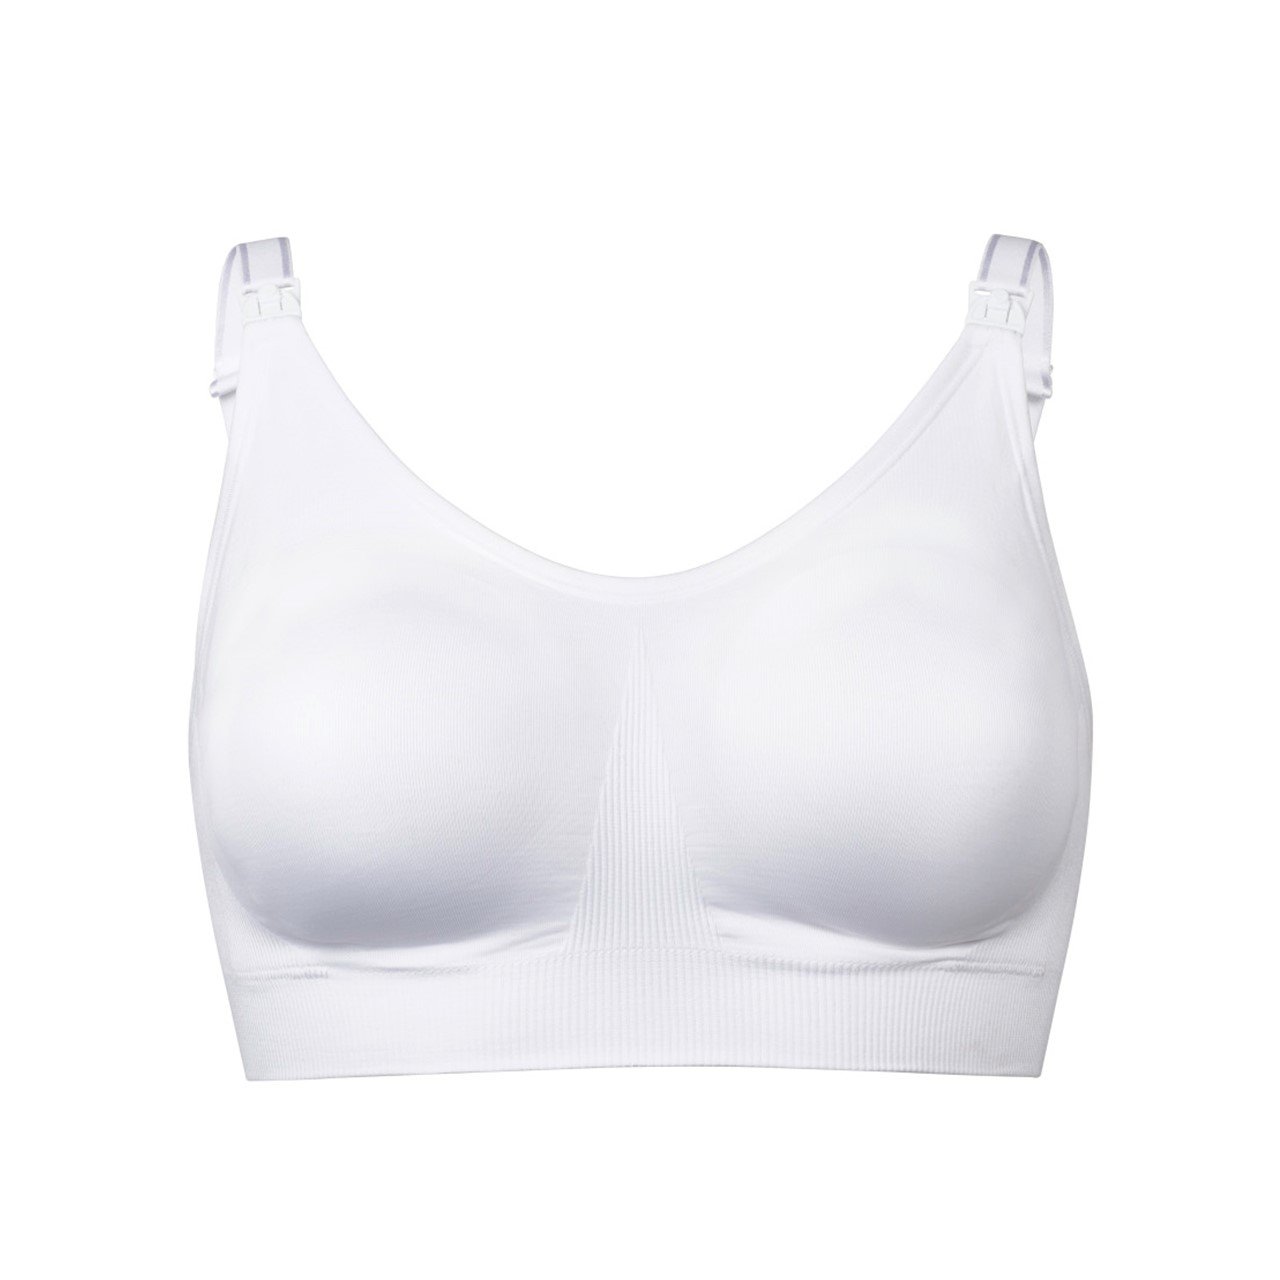 Buy Medela Ultimate BodyFit Bra White Extra Large Size x1 · Canada